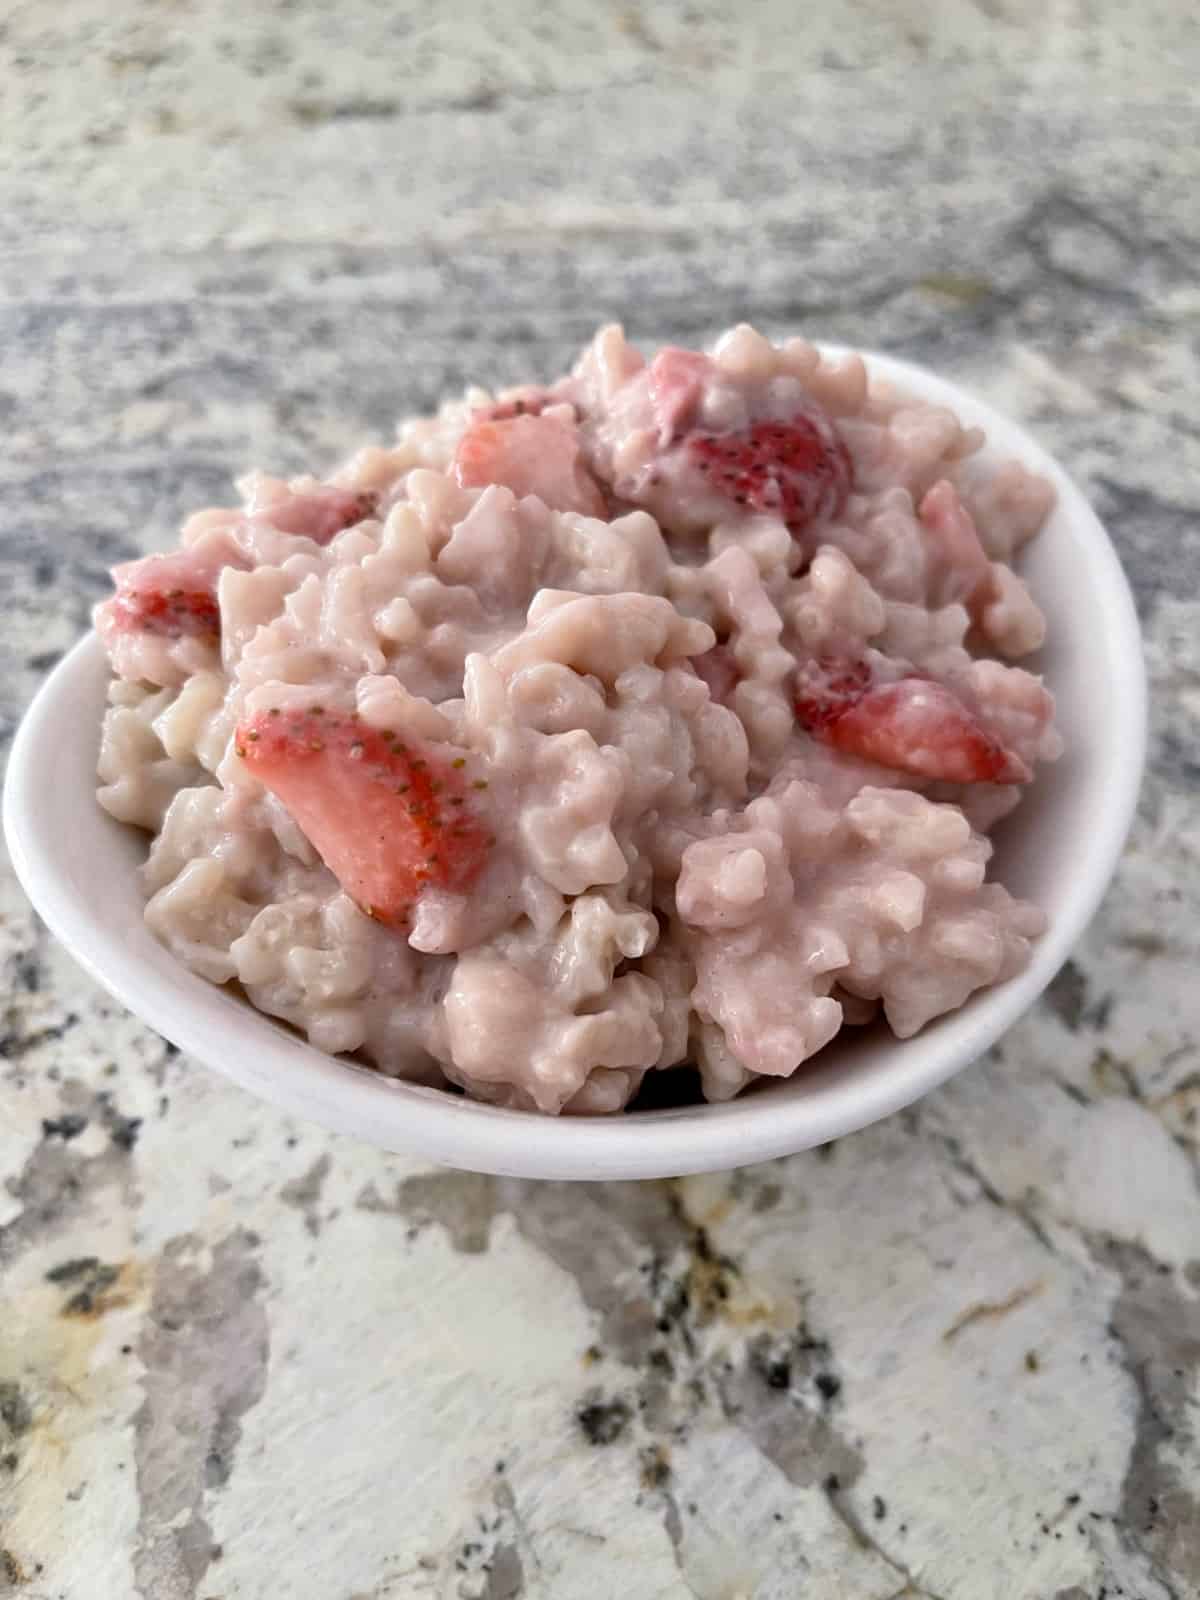 Creamy strawberry rice pudding in small white bowl on granite counter.